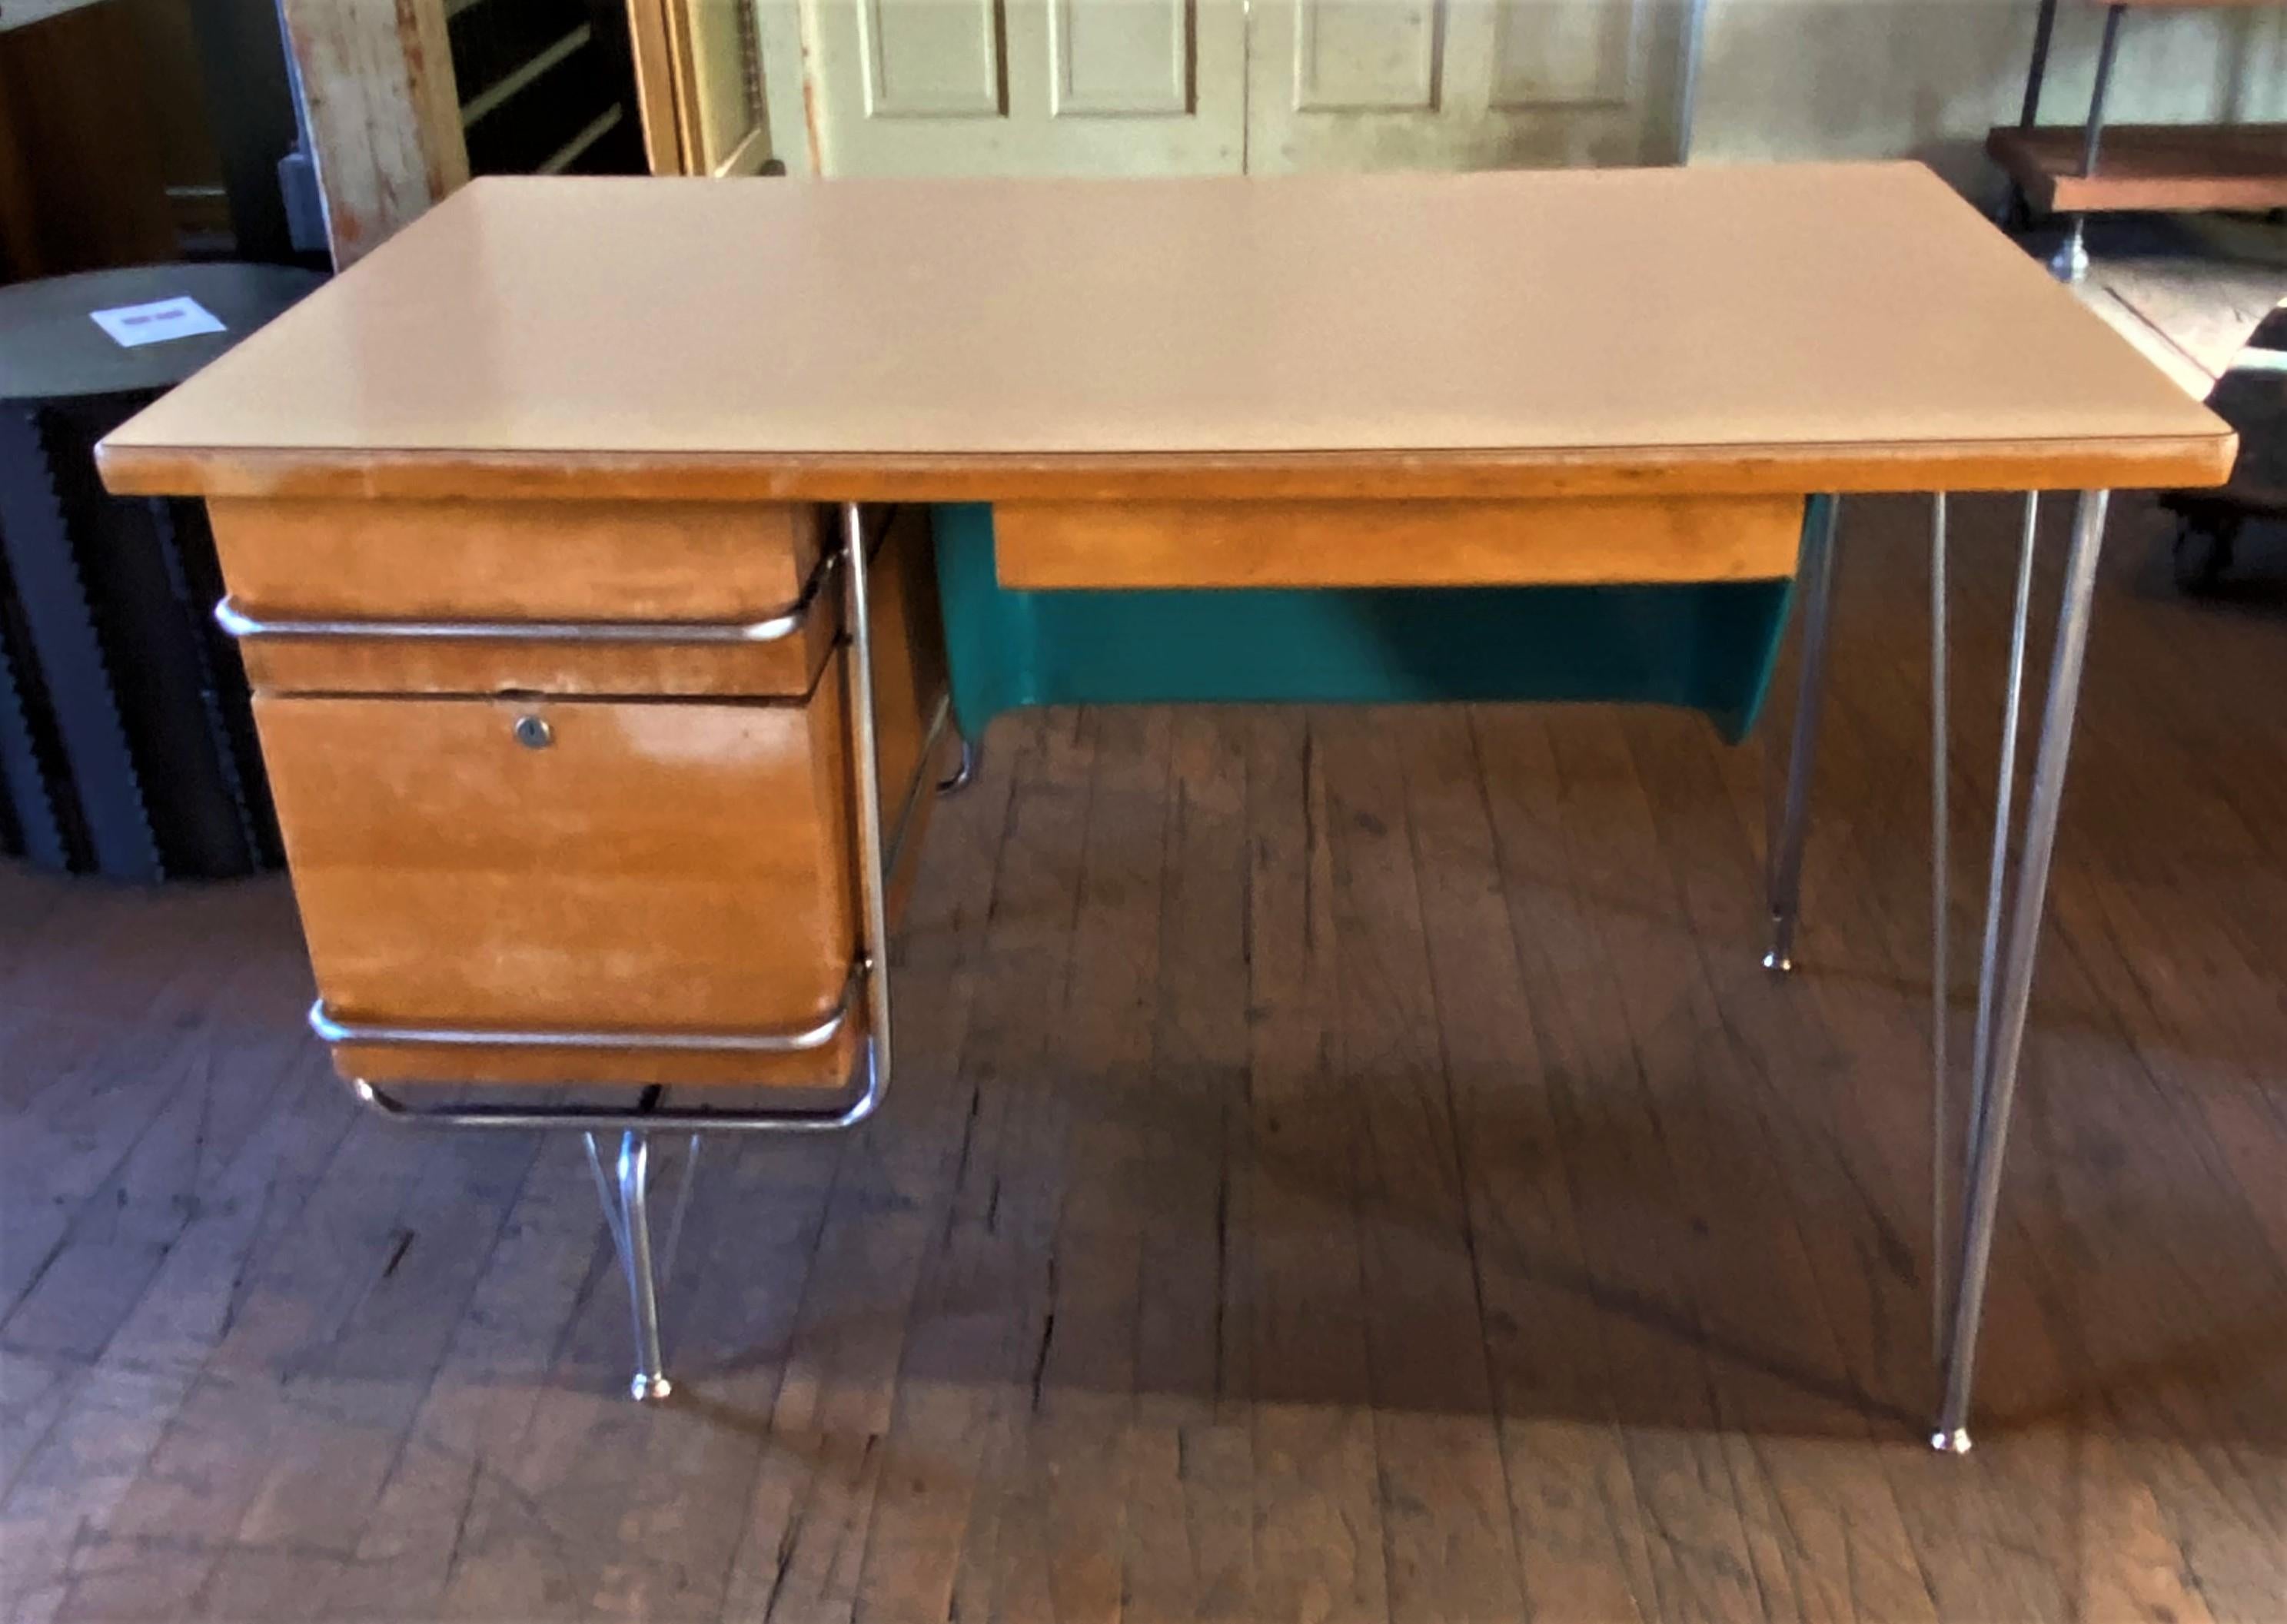 Heywood Wakefield trimline desk by Kem Weber
Overall Dimensions: 29 1/2